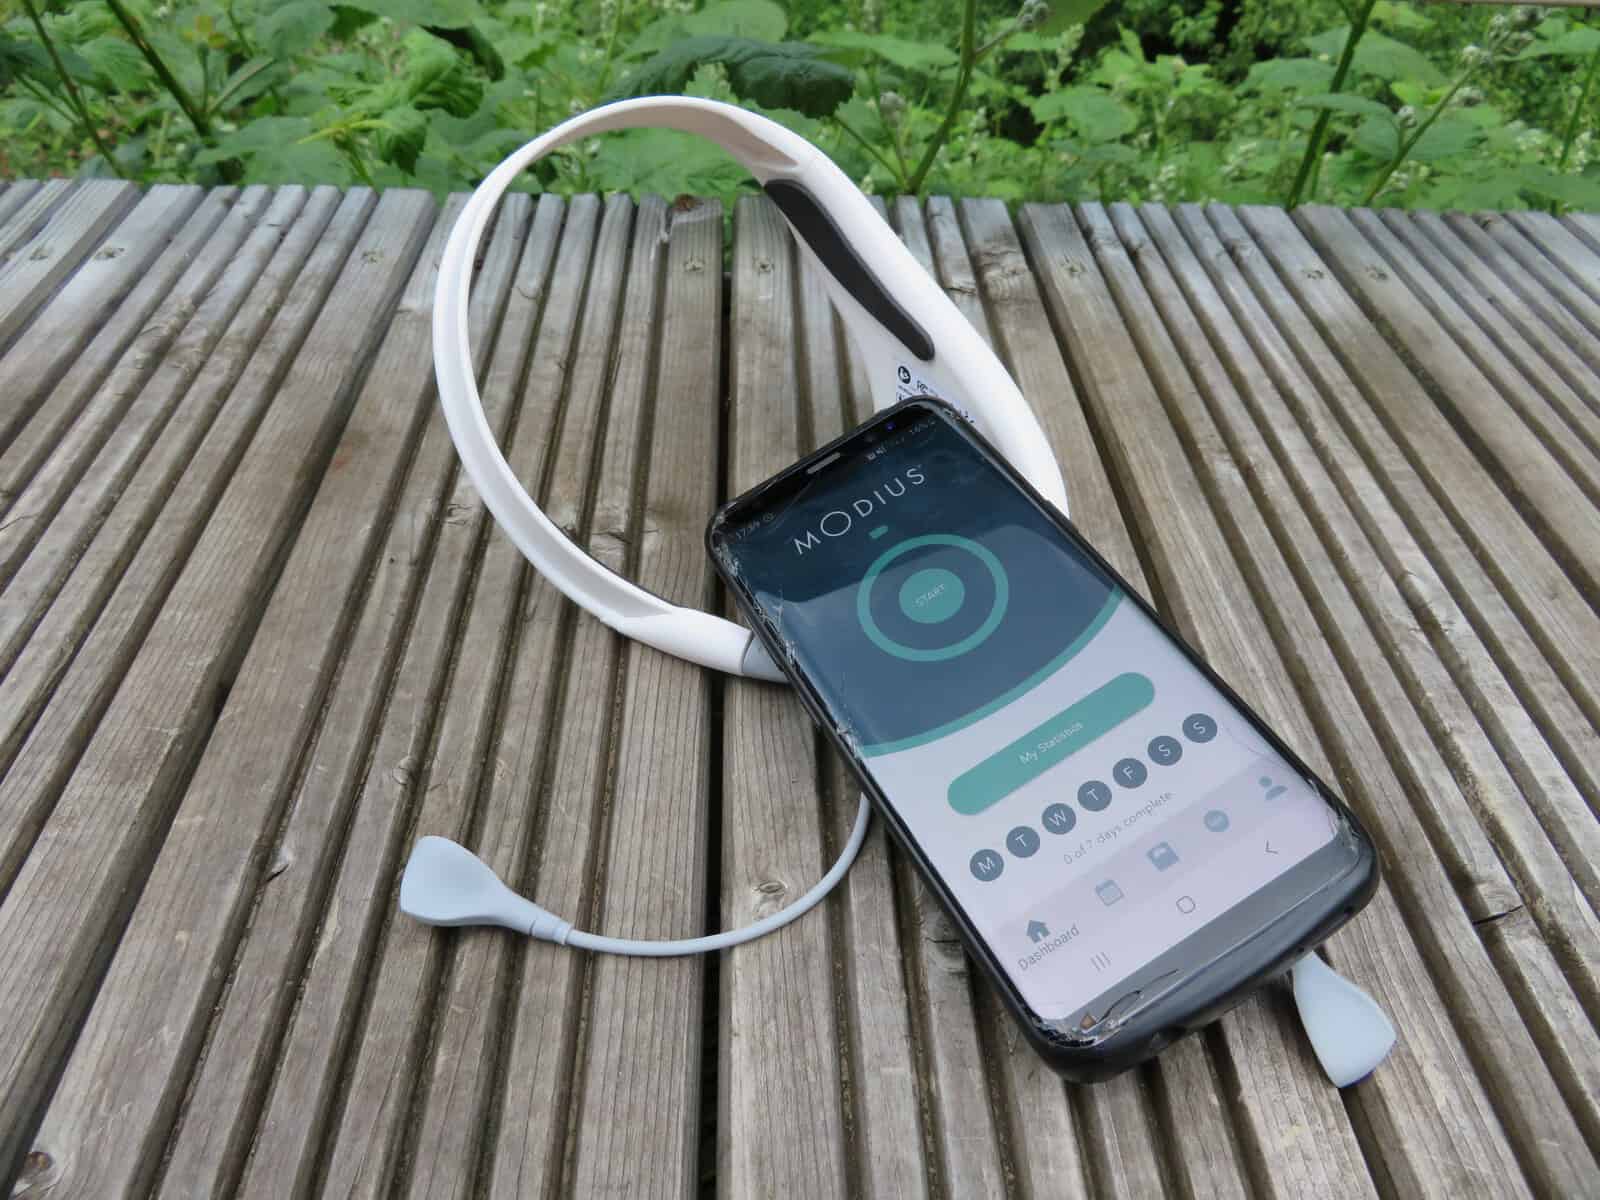 Modius health headset next to mobile phone with Modius app